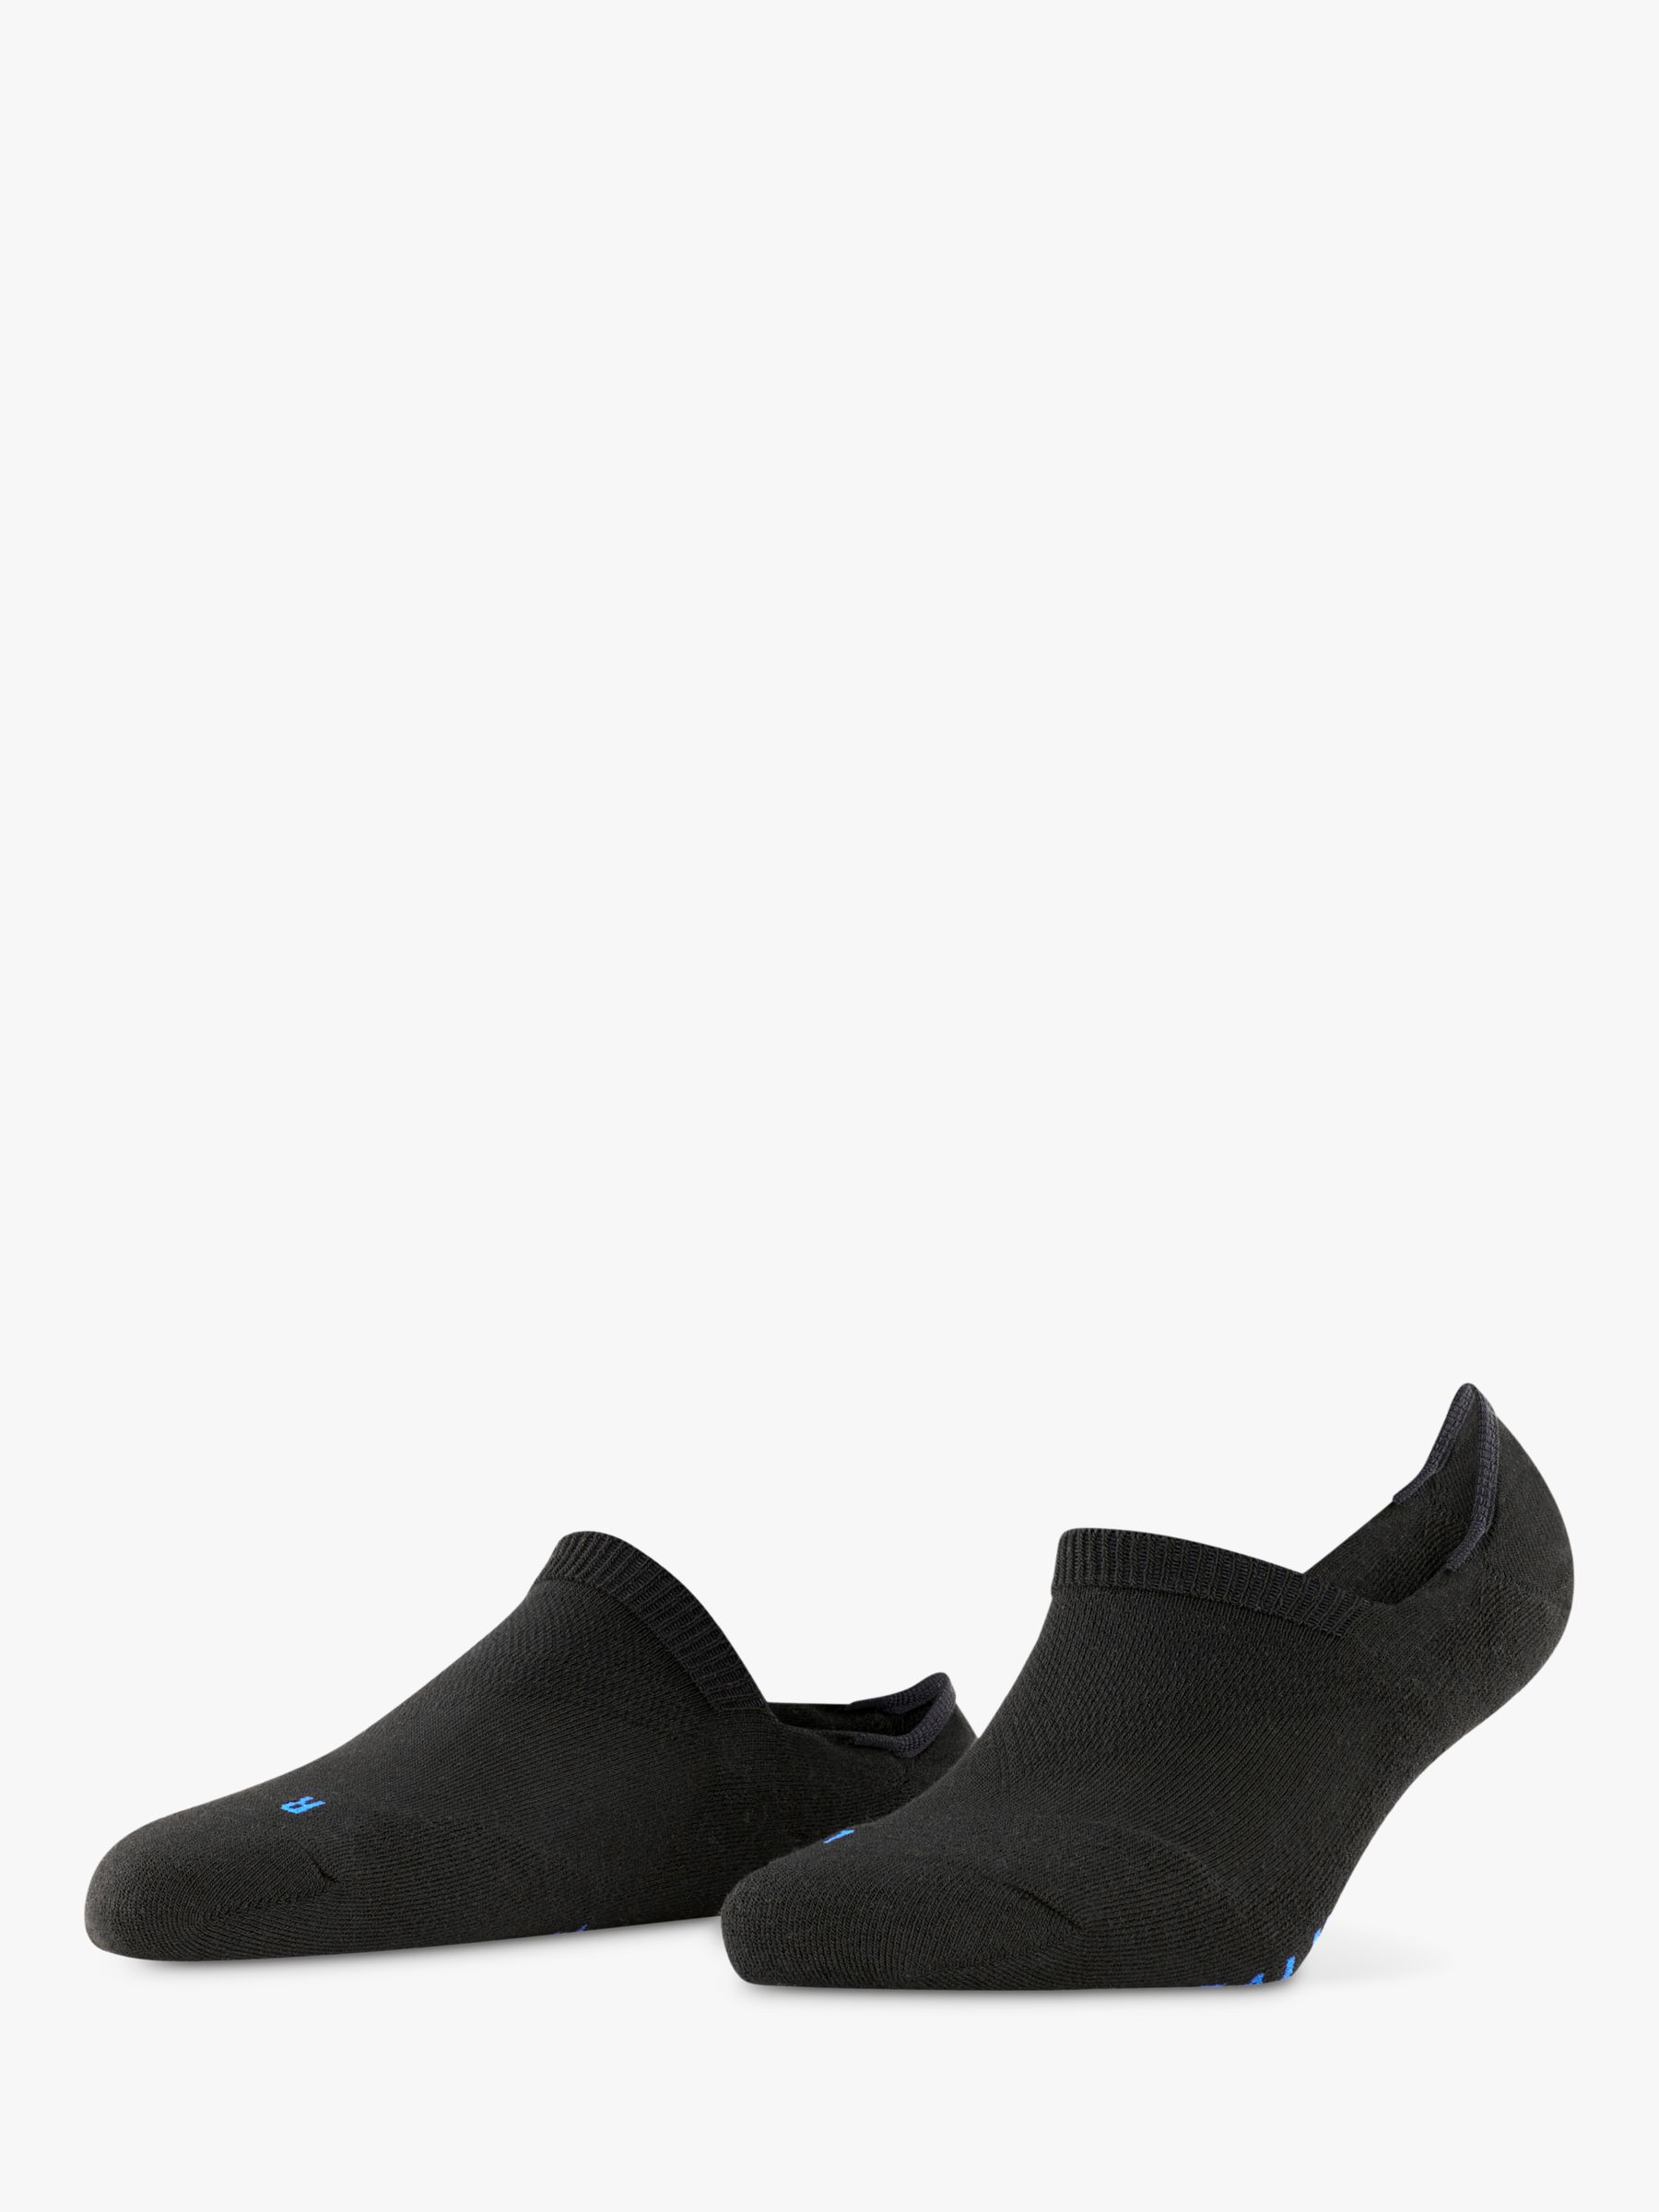 FALKE Cool Kick Liner Socks, 3000 Black